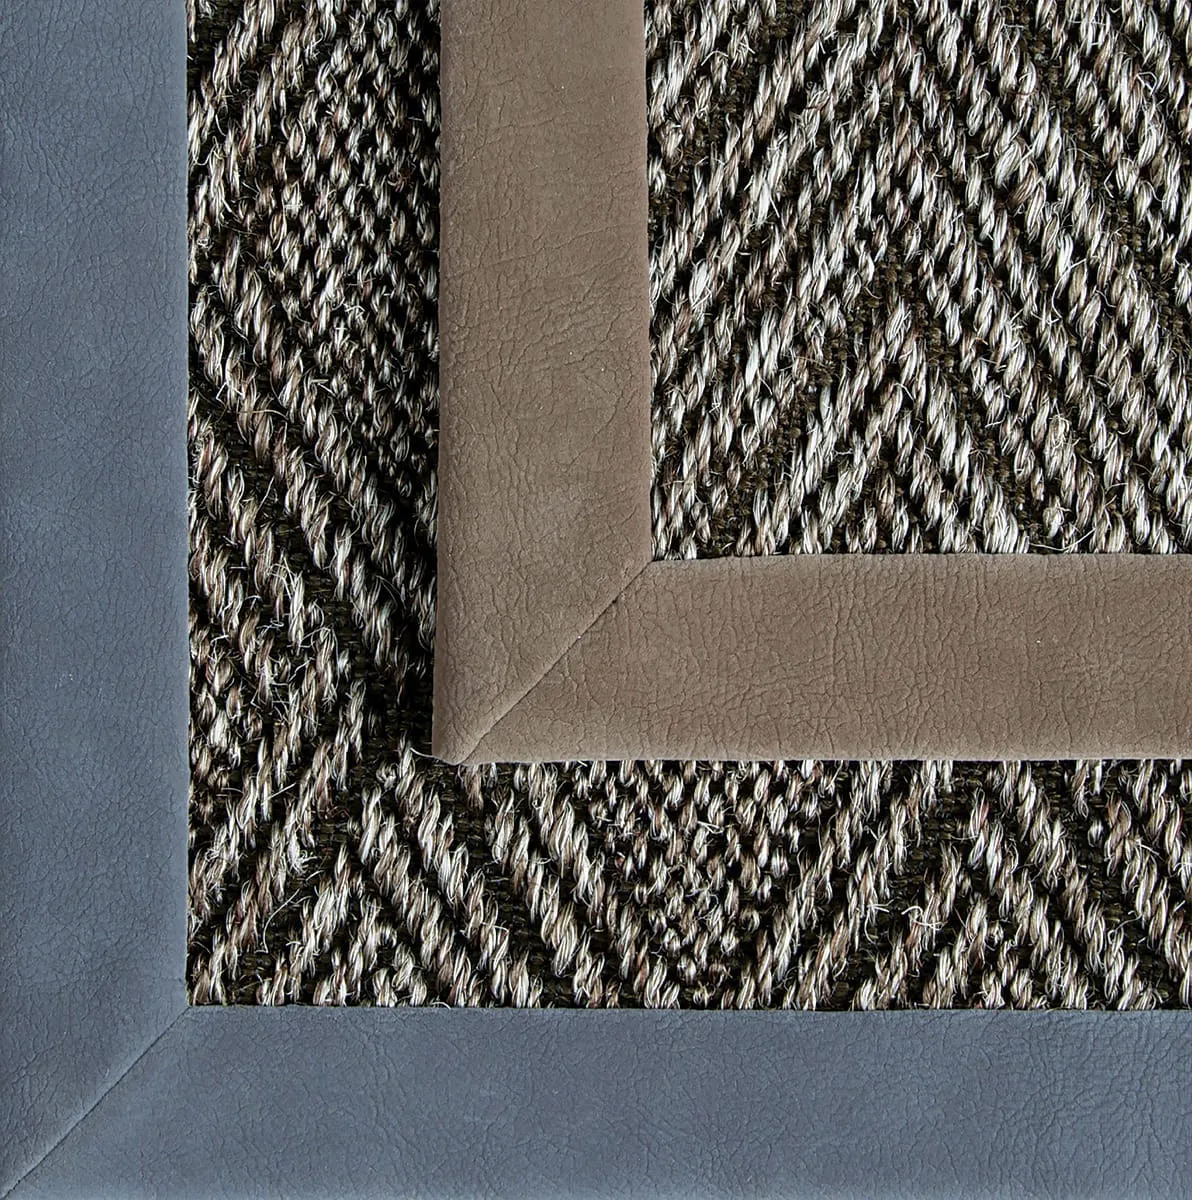 cotton carpet binding tape  black and grey strip cotton carpet binding tape